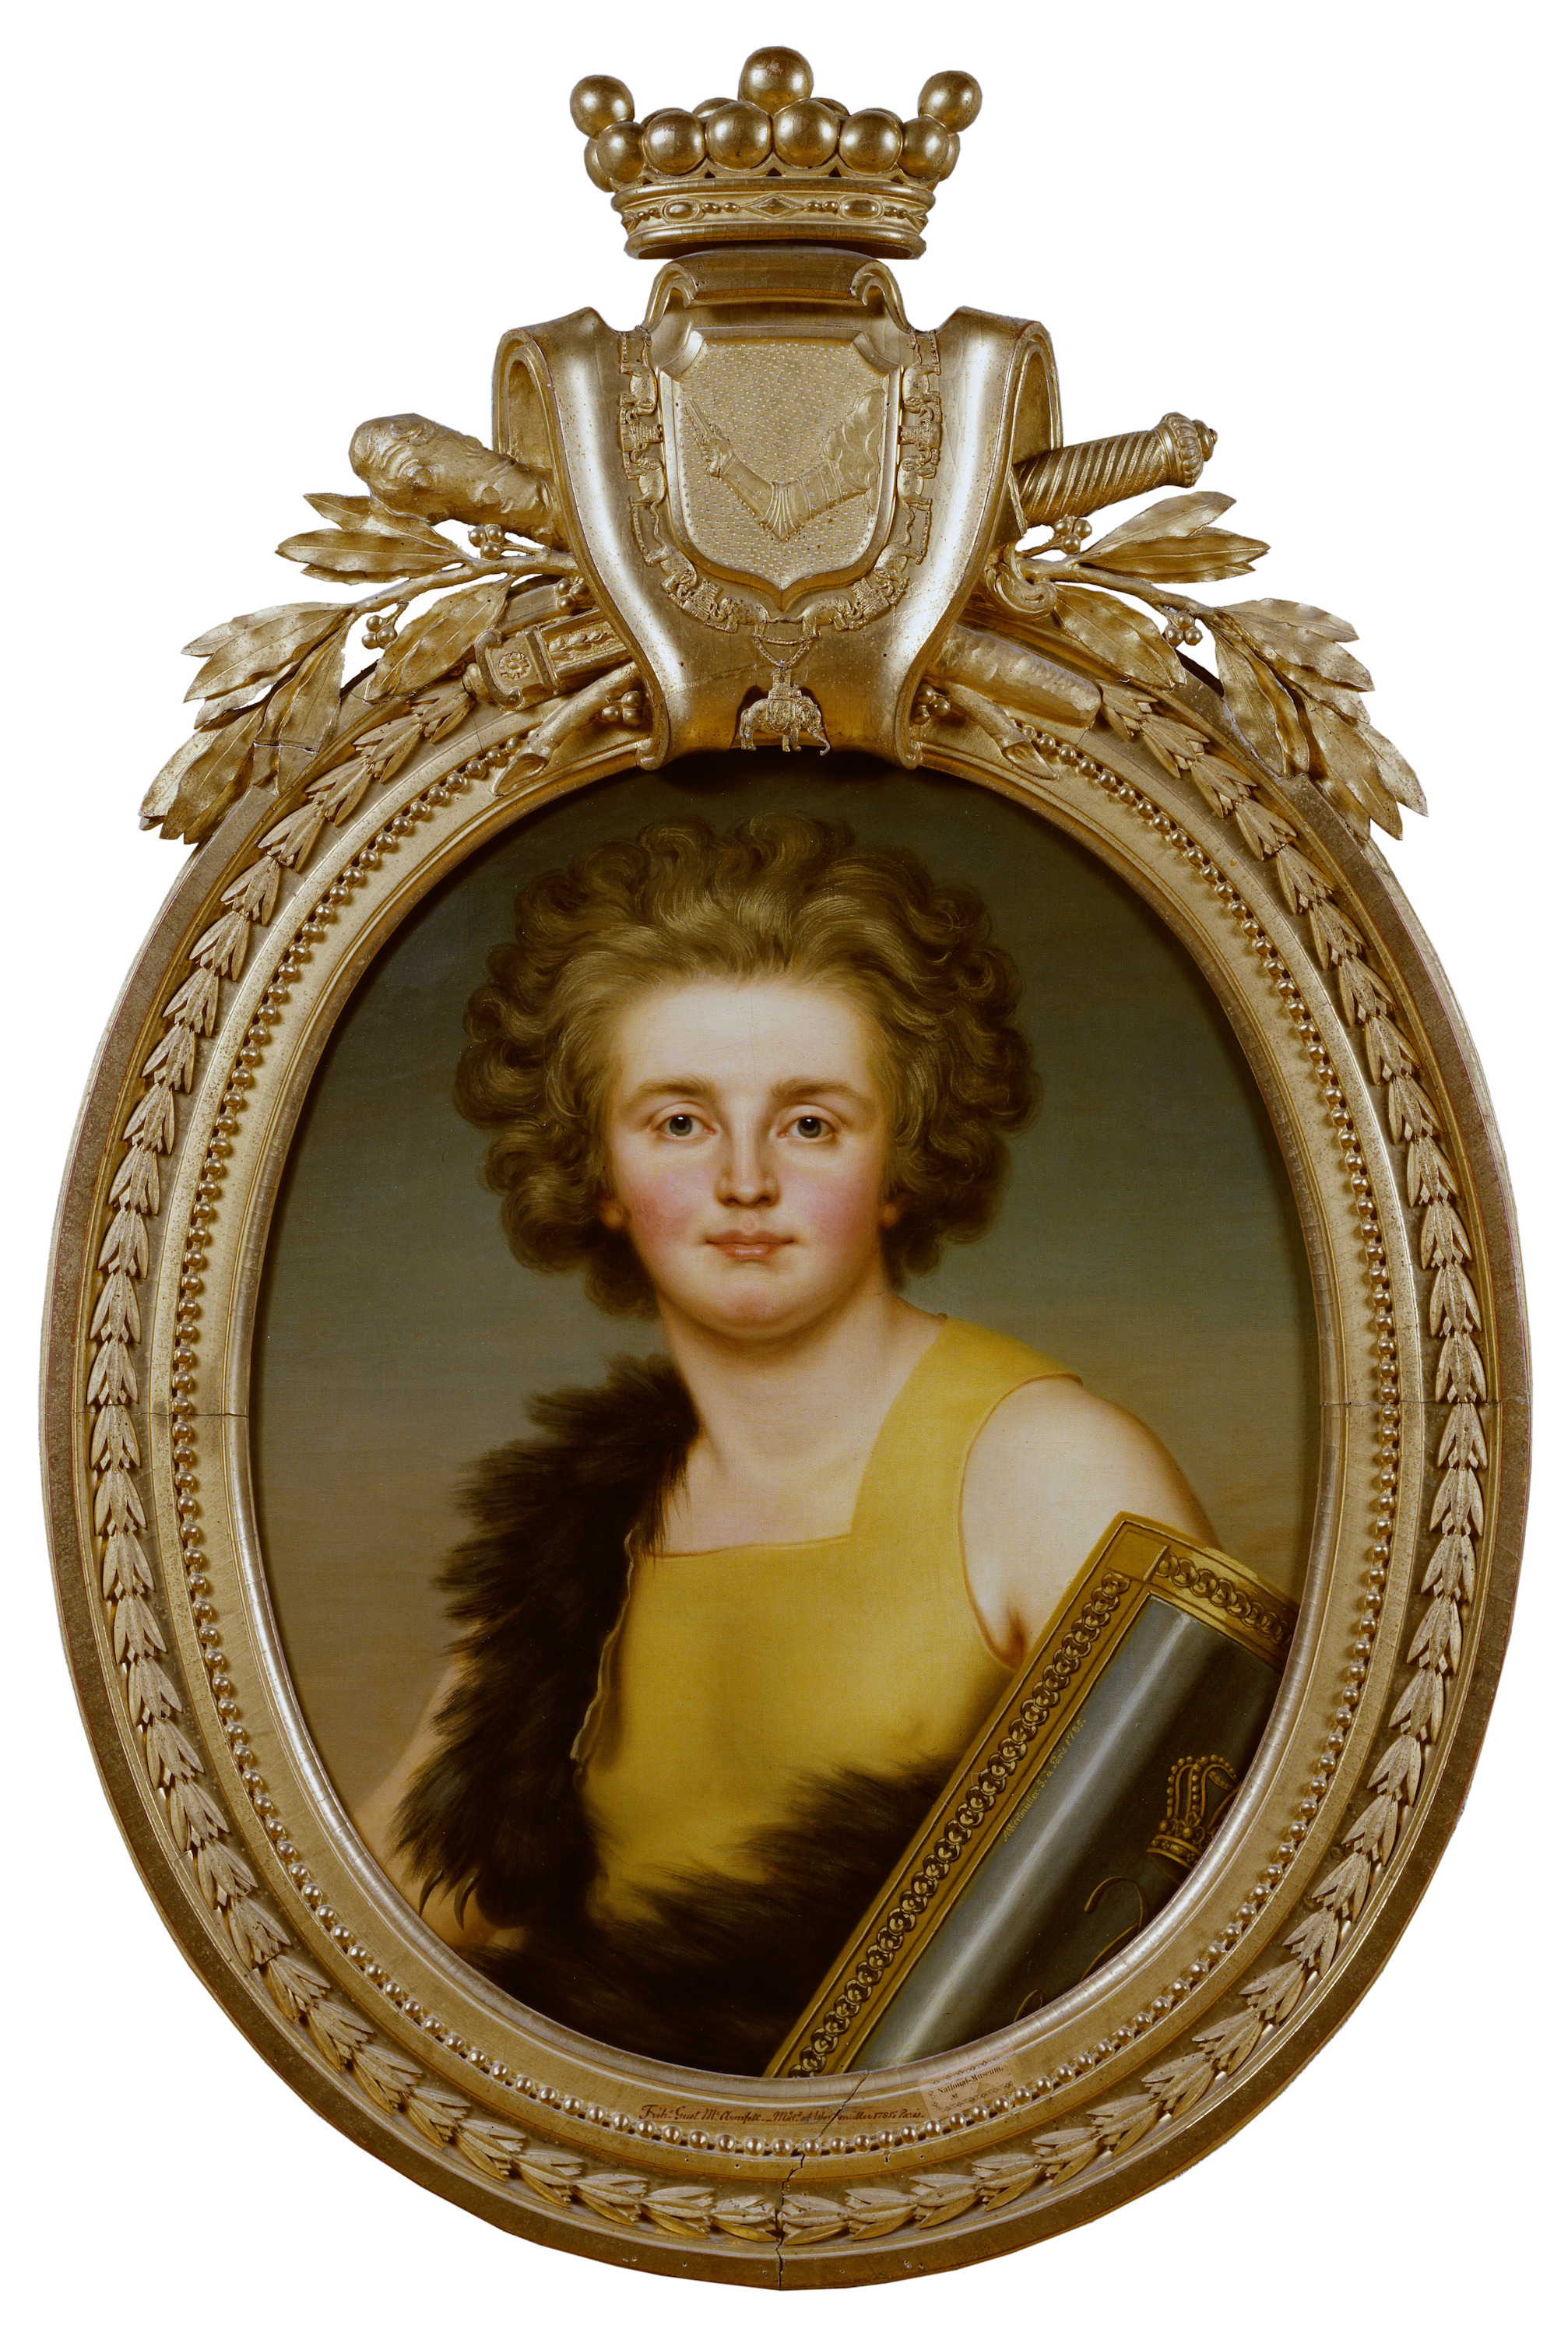 گوستاف ماوریتس آرمفلت by آدولف اولریک ورتمولر - امضا شده 1785 - 73 x 58,5 cm 